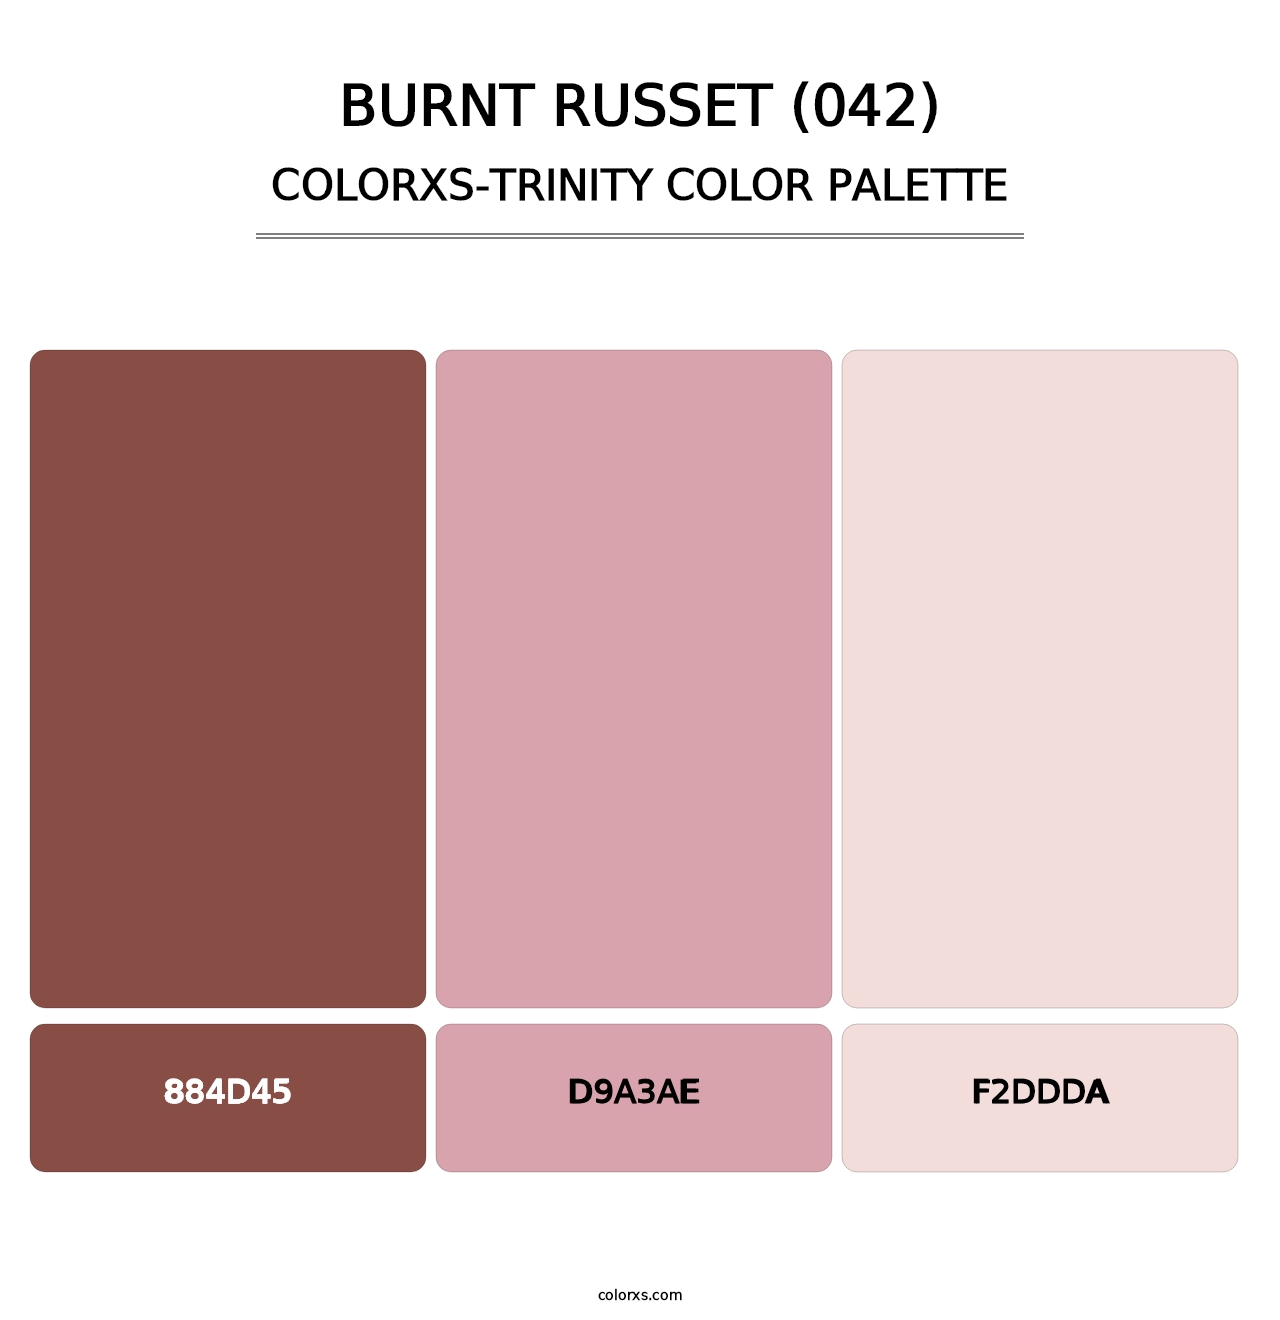 Burnt Russet (042) - Colorxs Trinity Palette